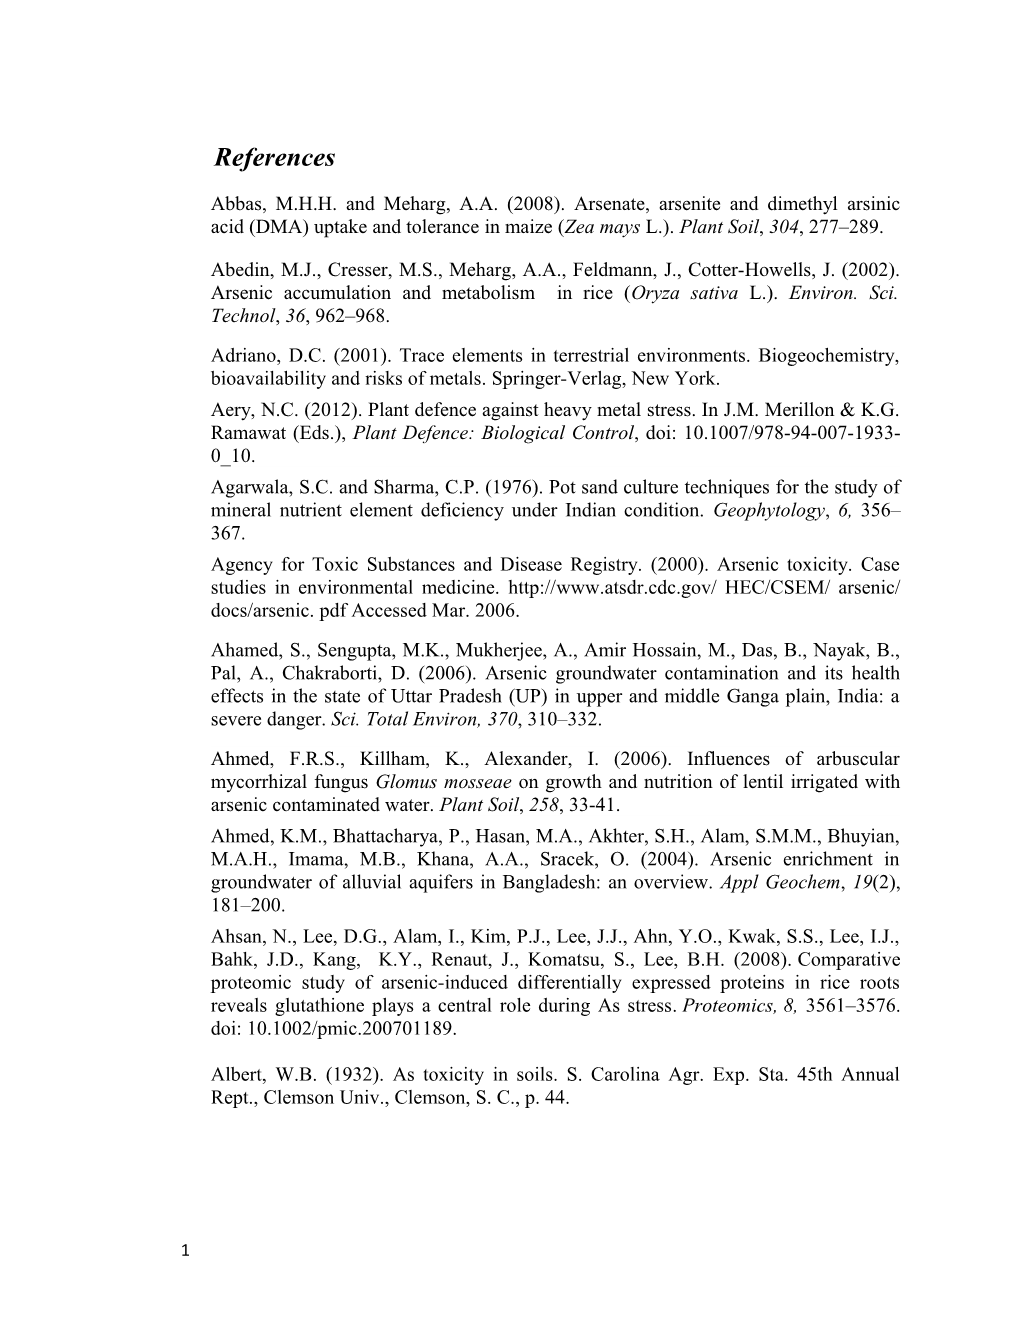 Abbas, M.H.H. and Meharg, A.A. (2008). Arsenate, Arsenite and Dimethyl Arsinic Acid (DMA)